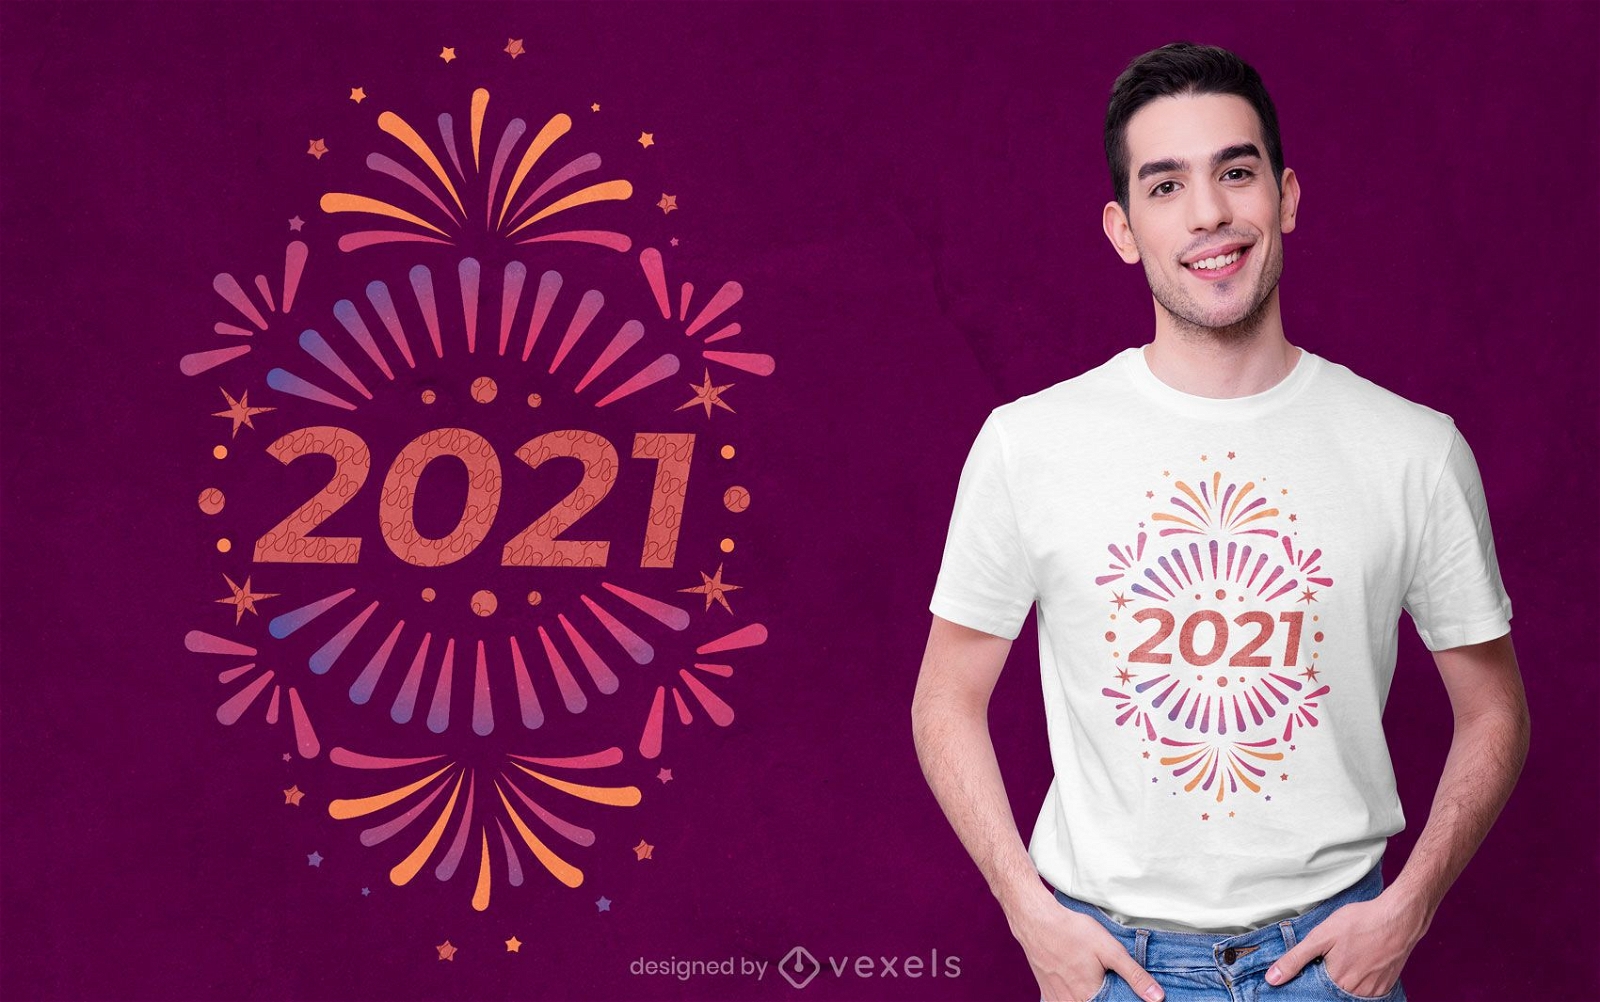 Dise?o de camiseta a?o nuevo 2021